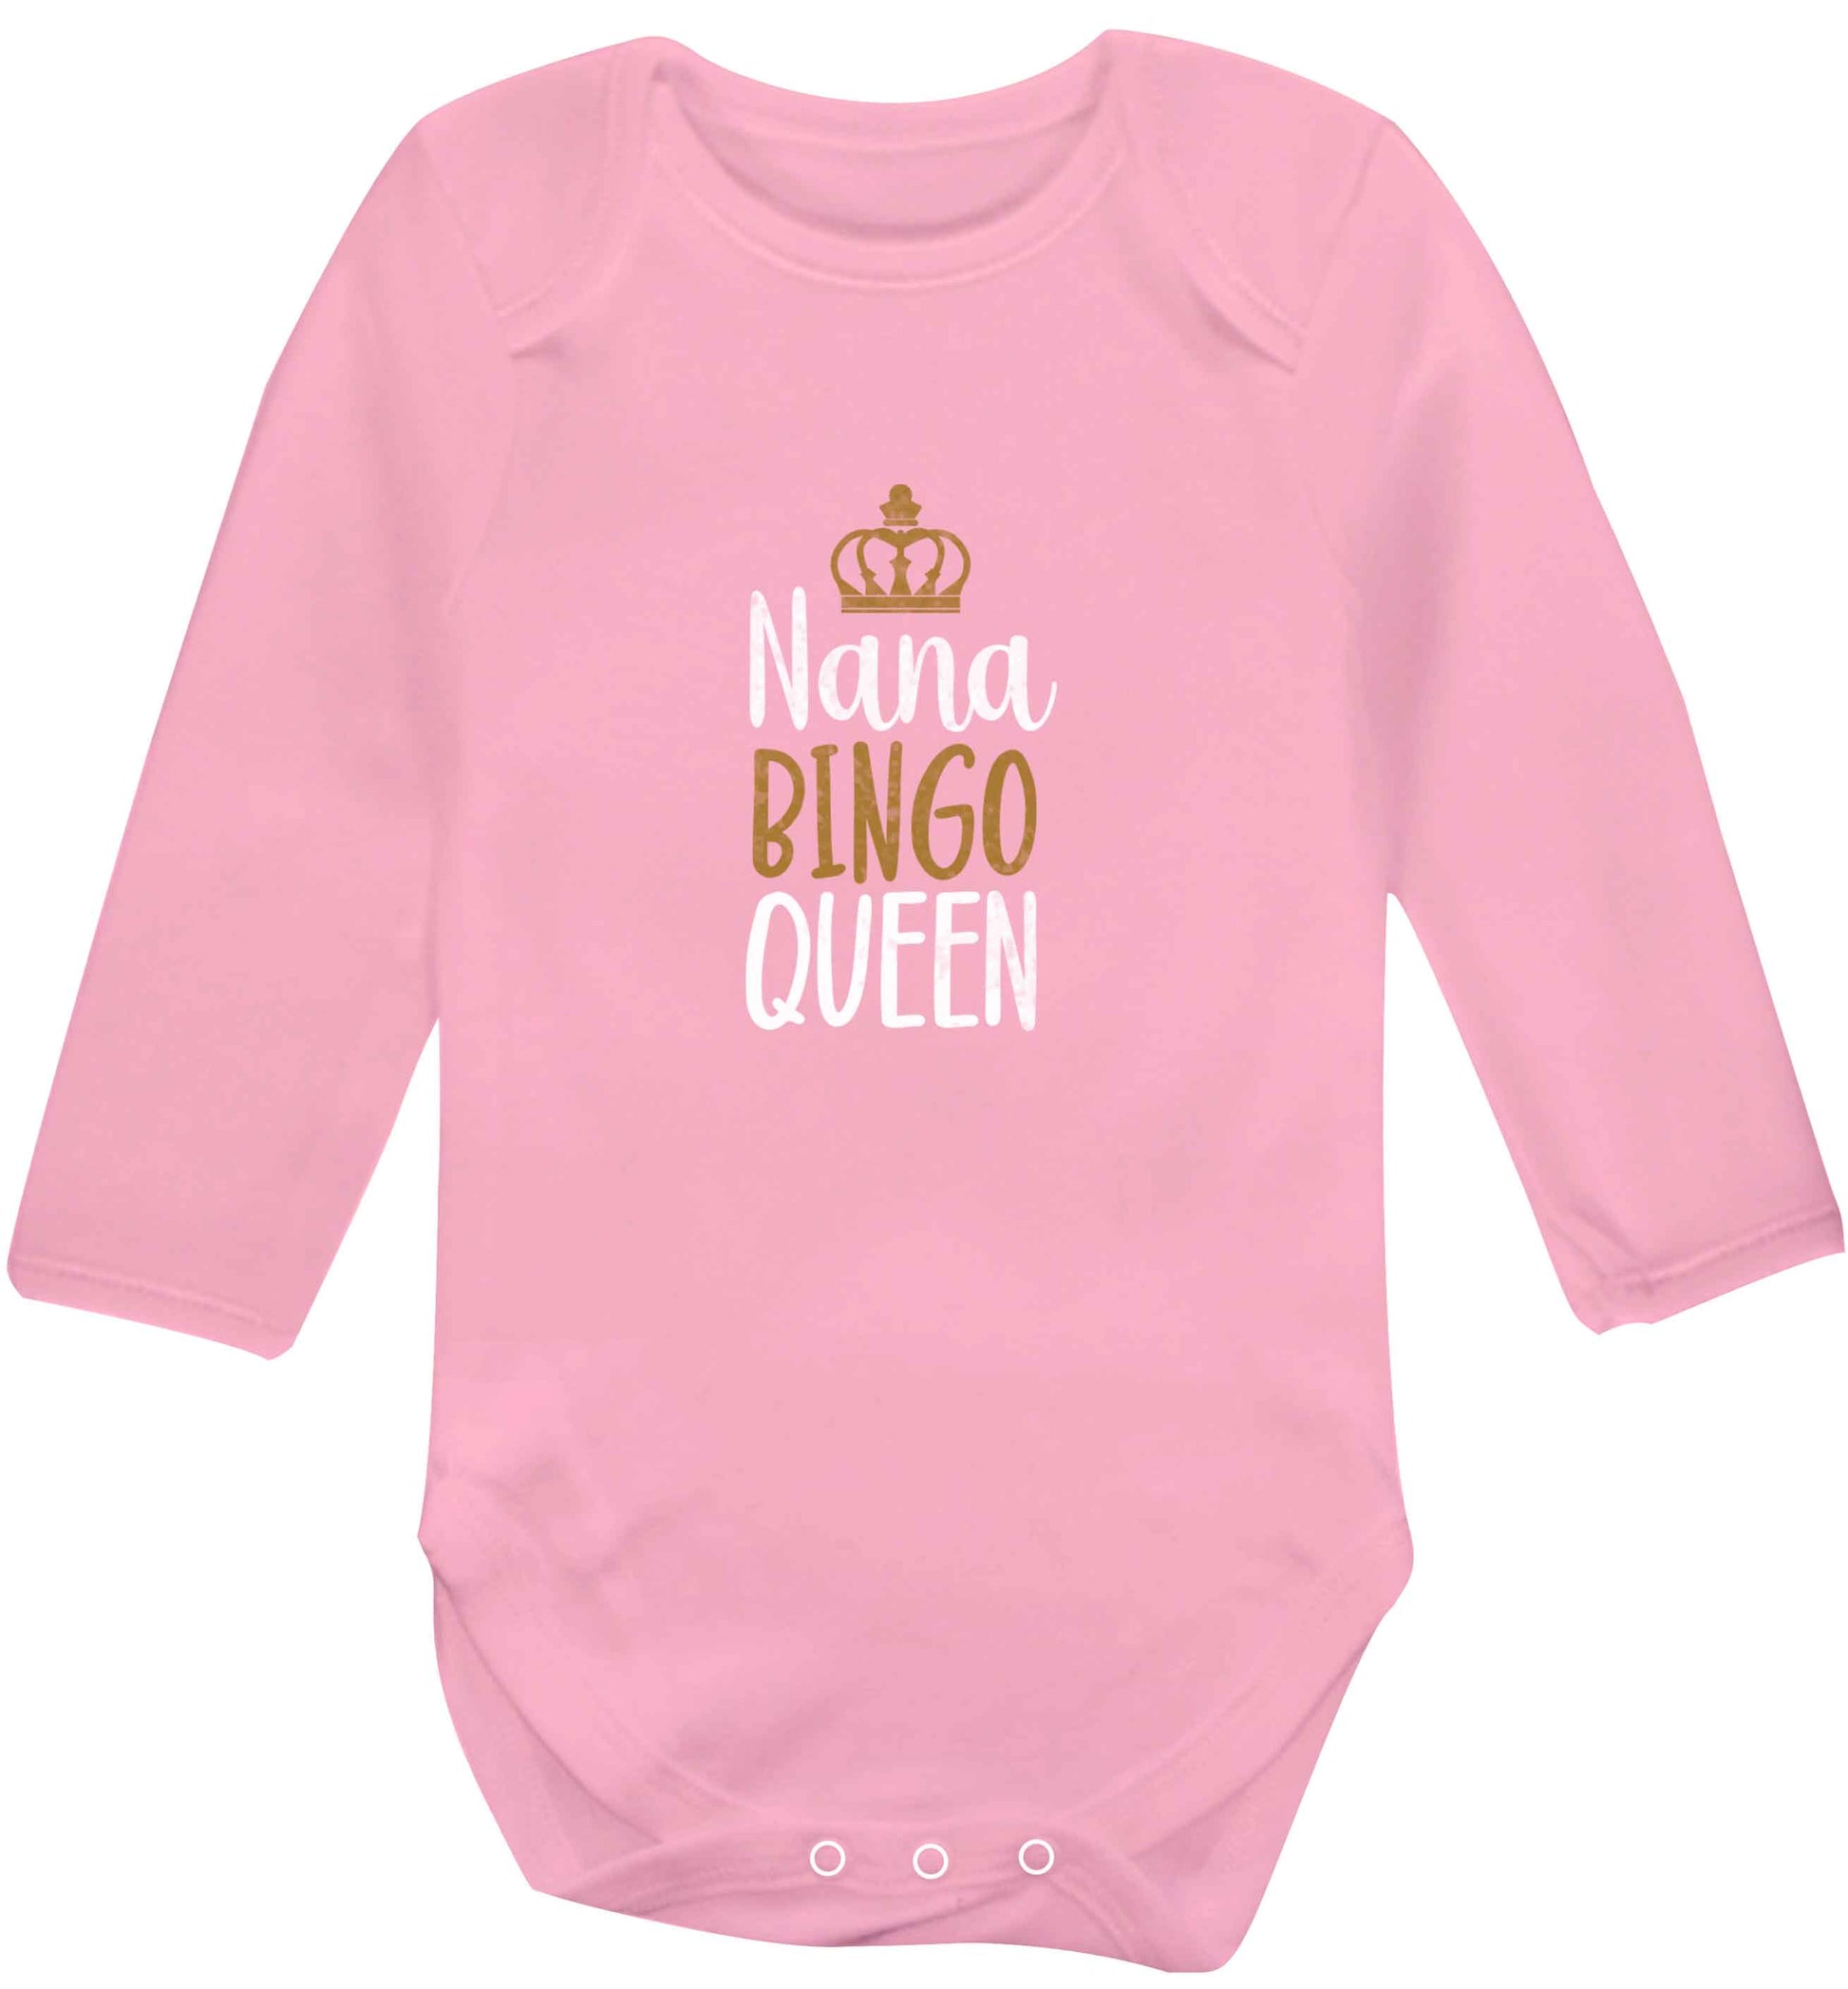 Personalised bingo queen baby vest long sleeved pale pink 6-12 months